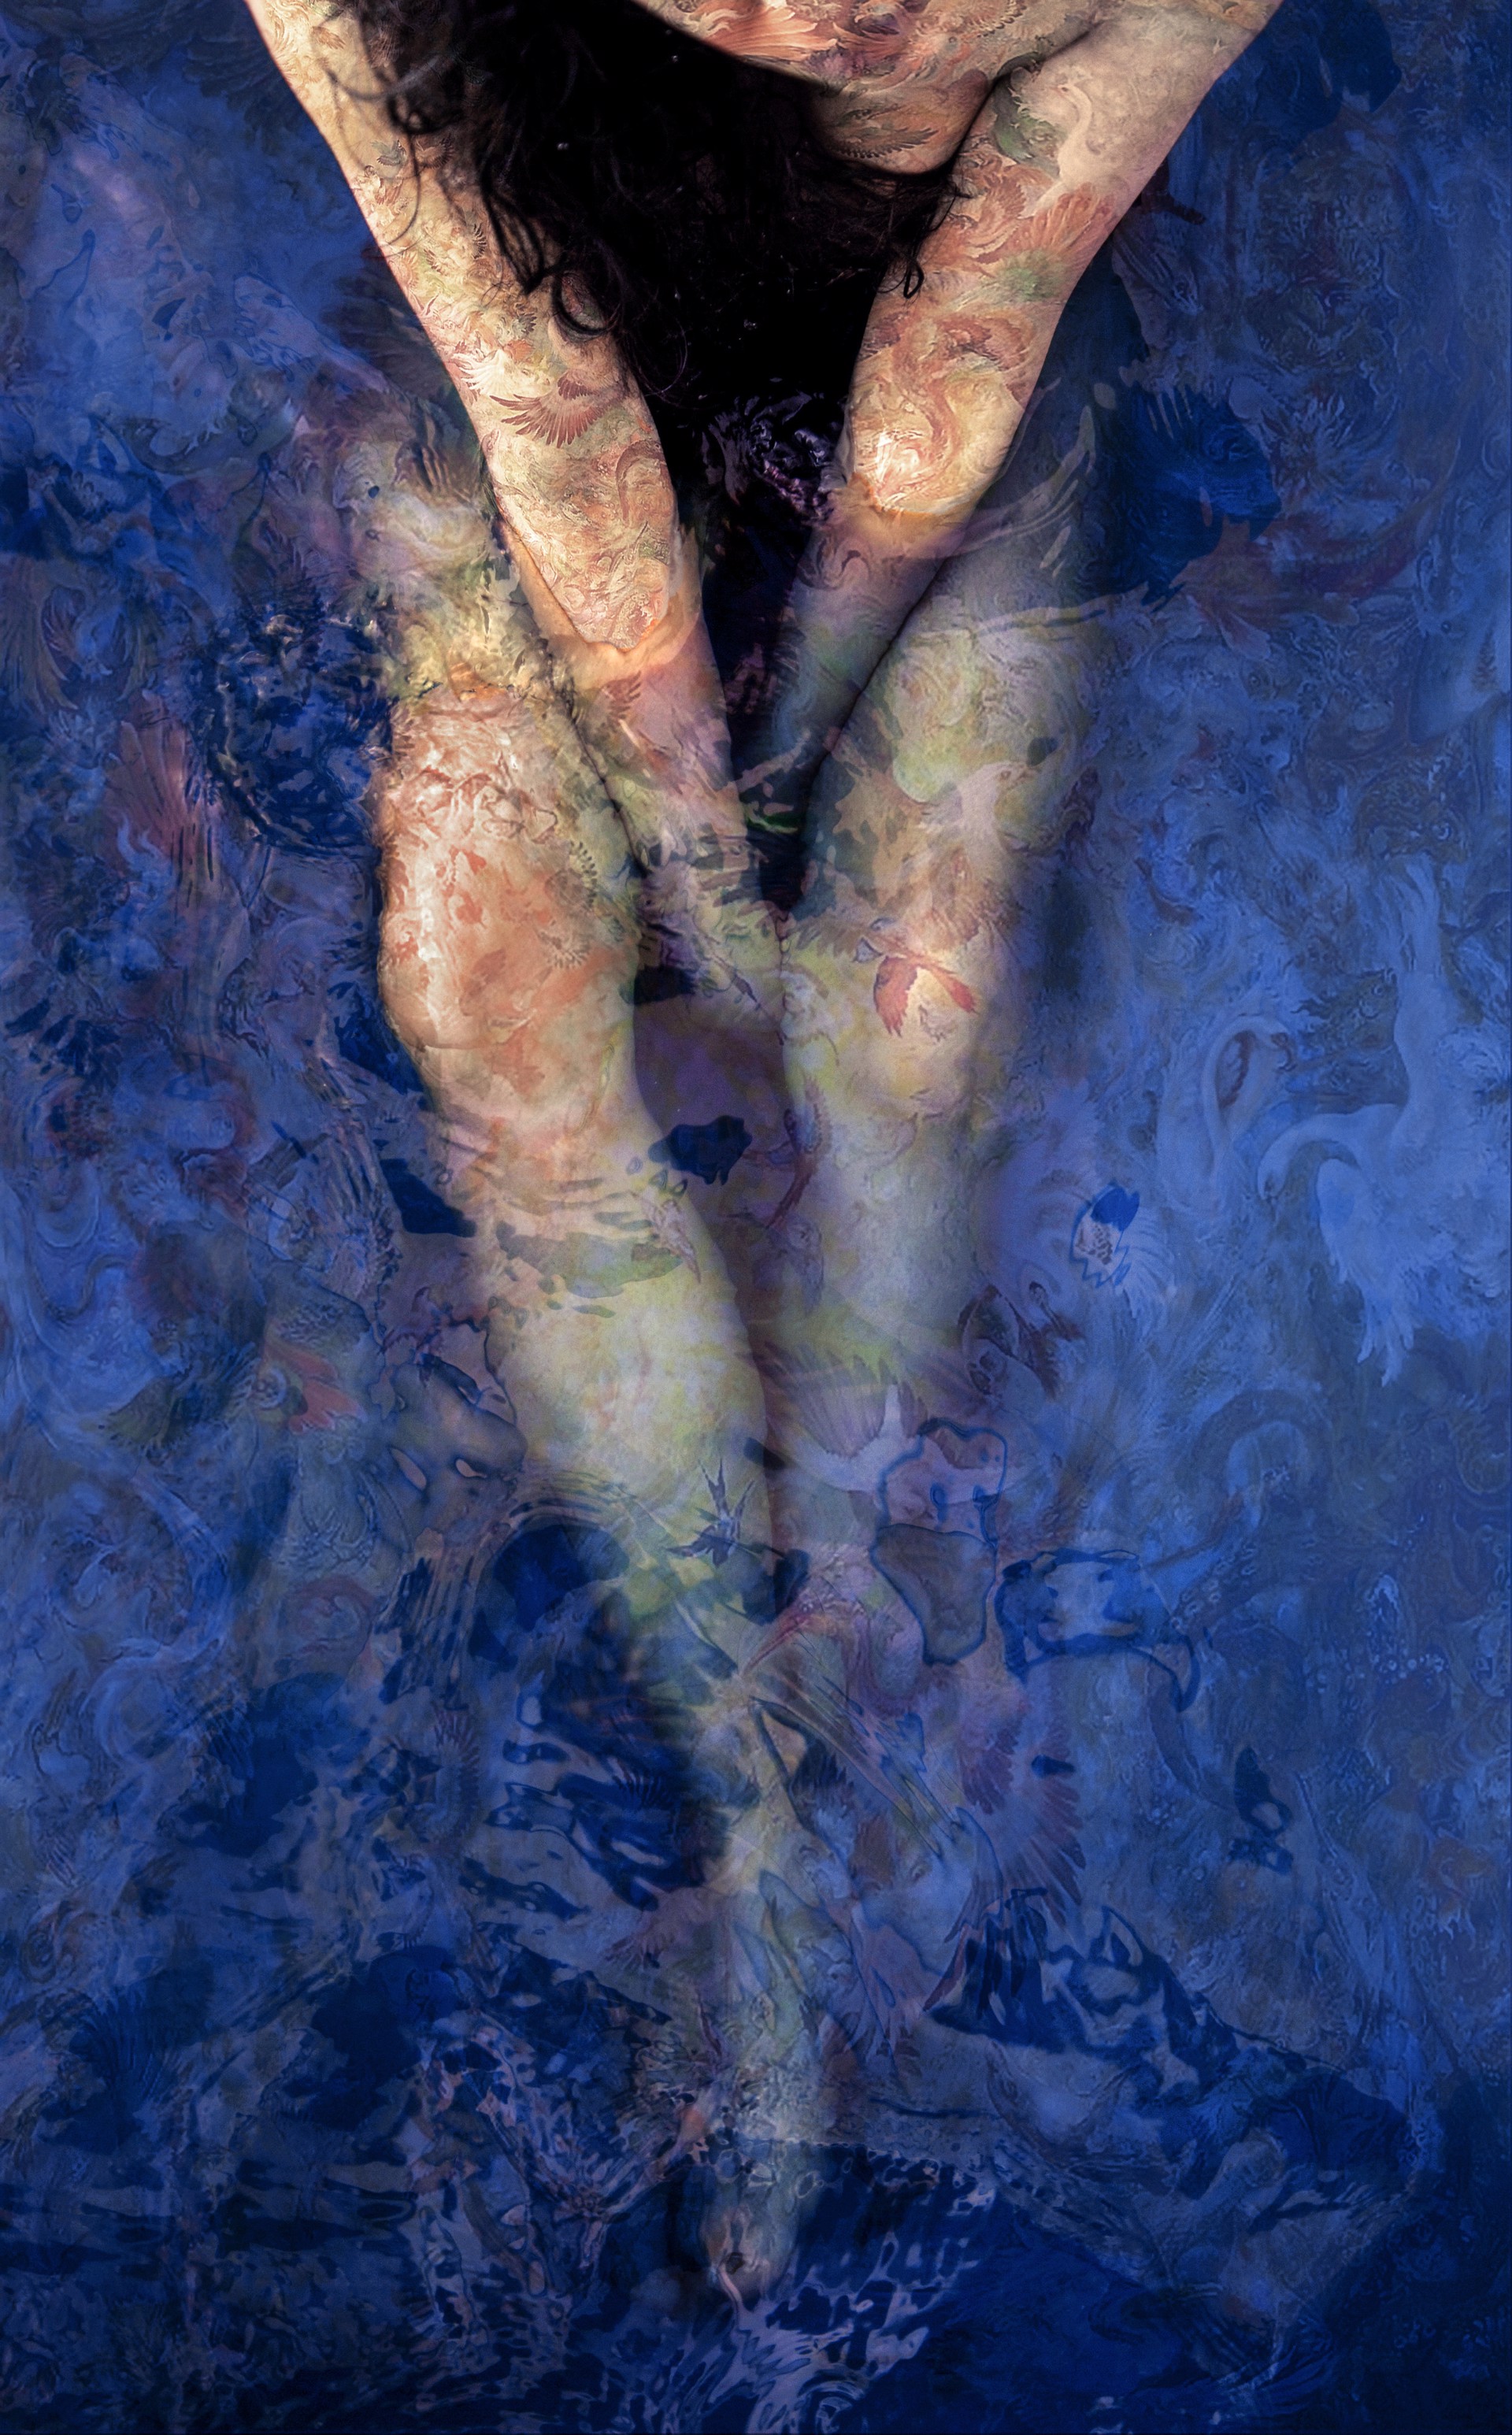 Deep in Blue by Nahal Rostami